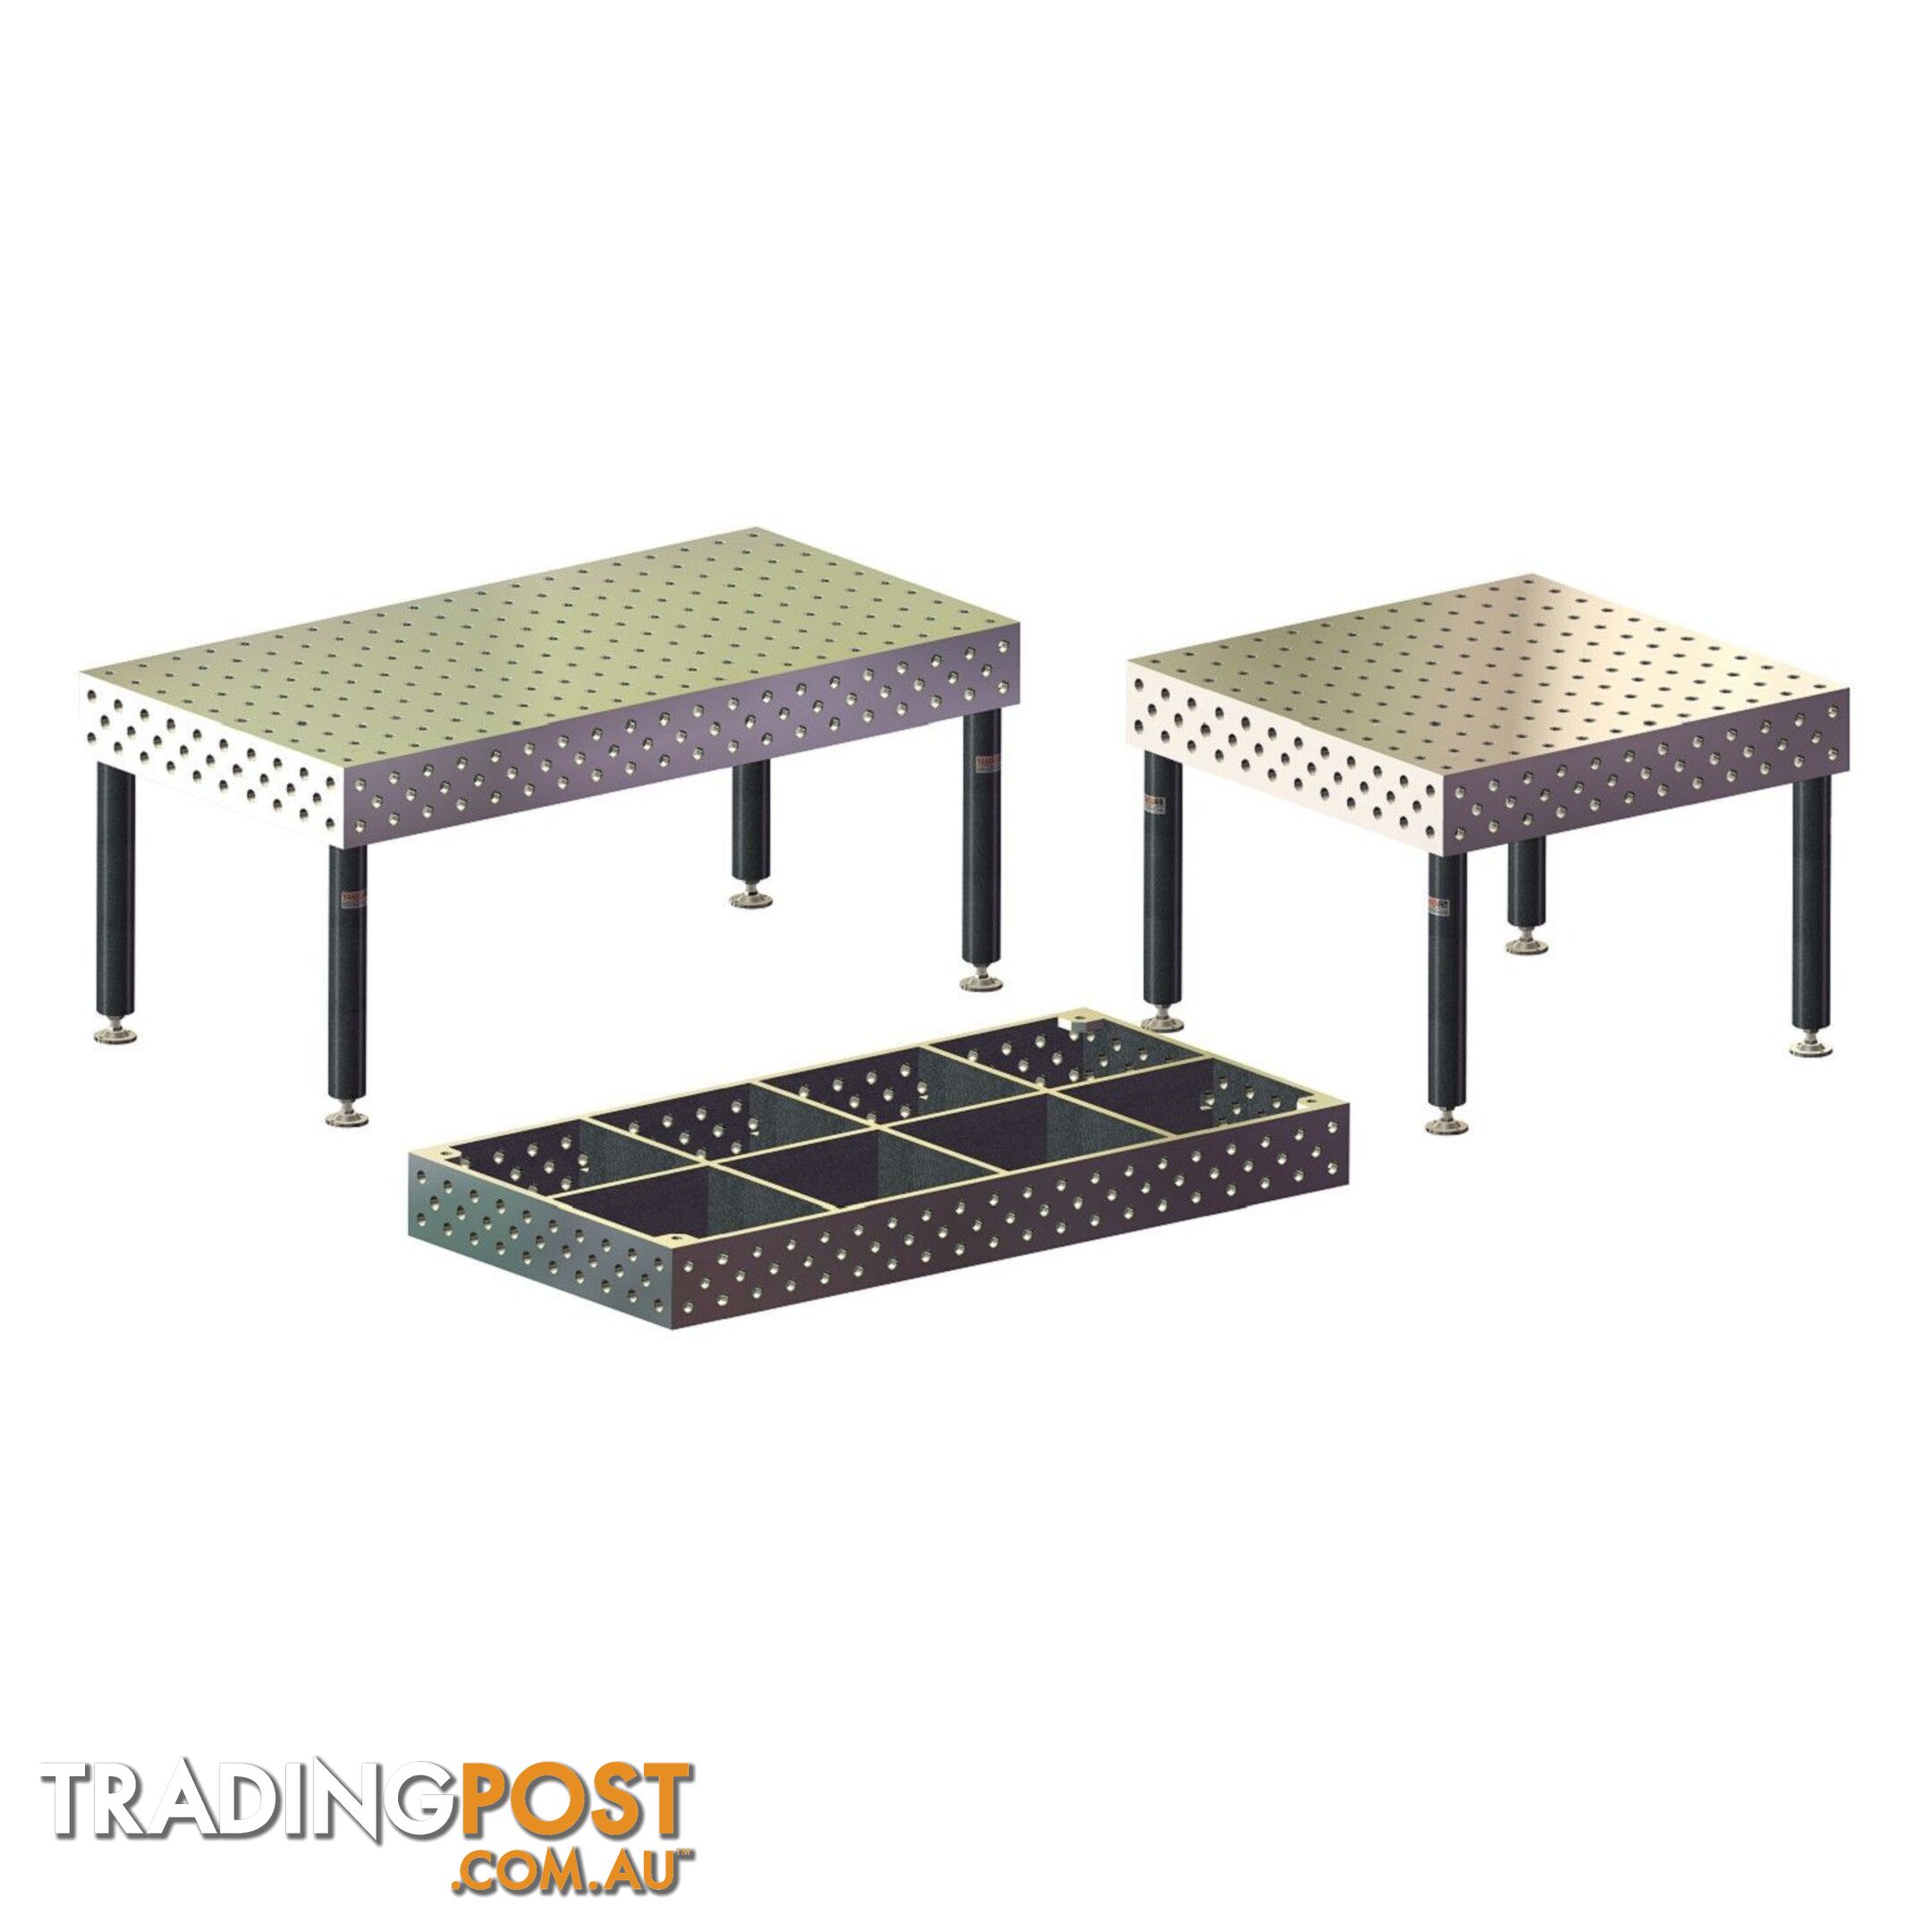 3D Welding Table 2000mm X 1000mm X 100mm 16S2010